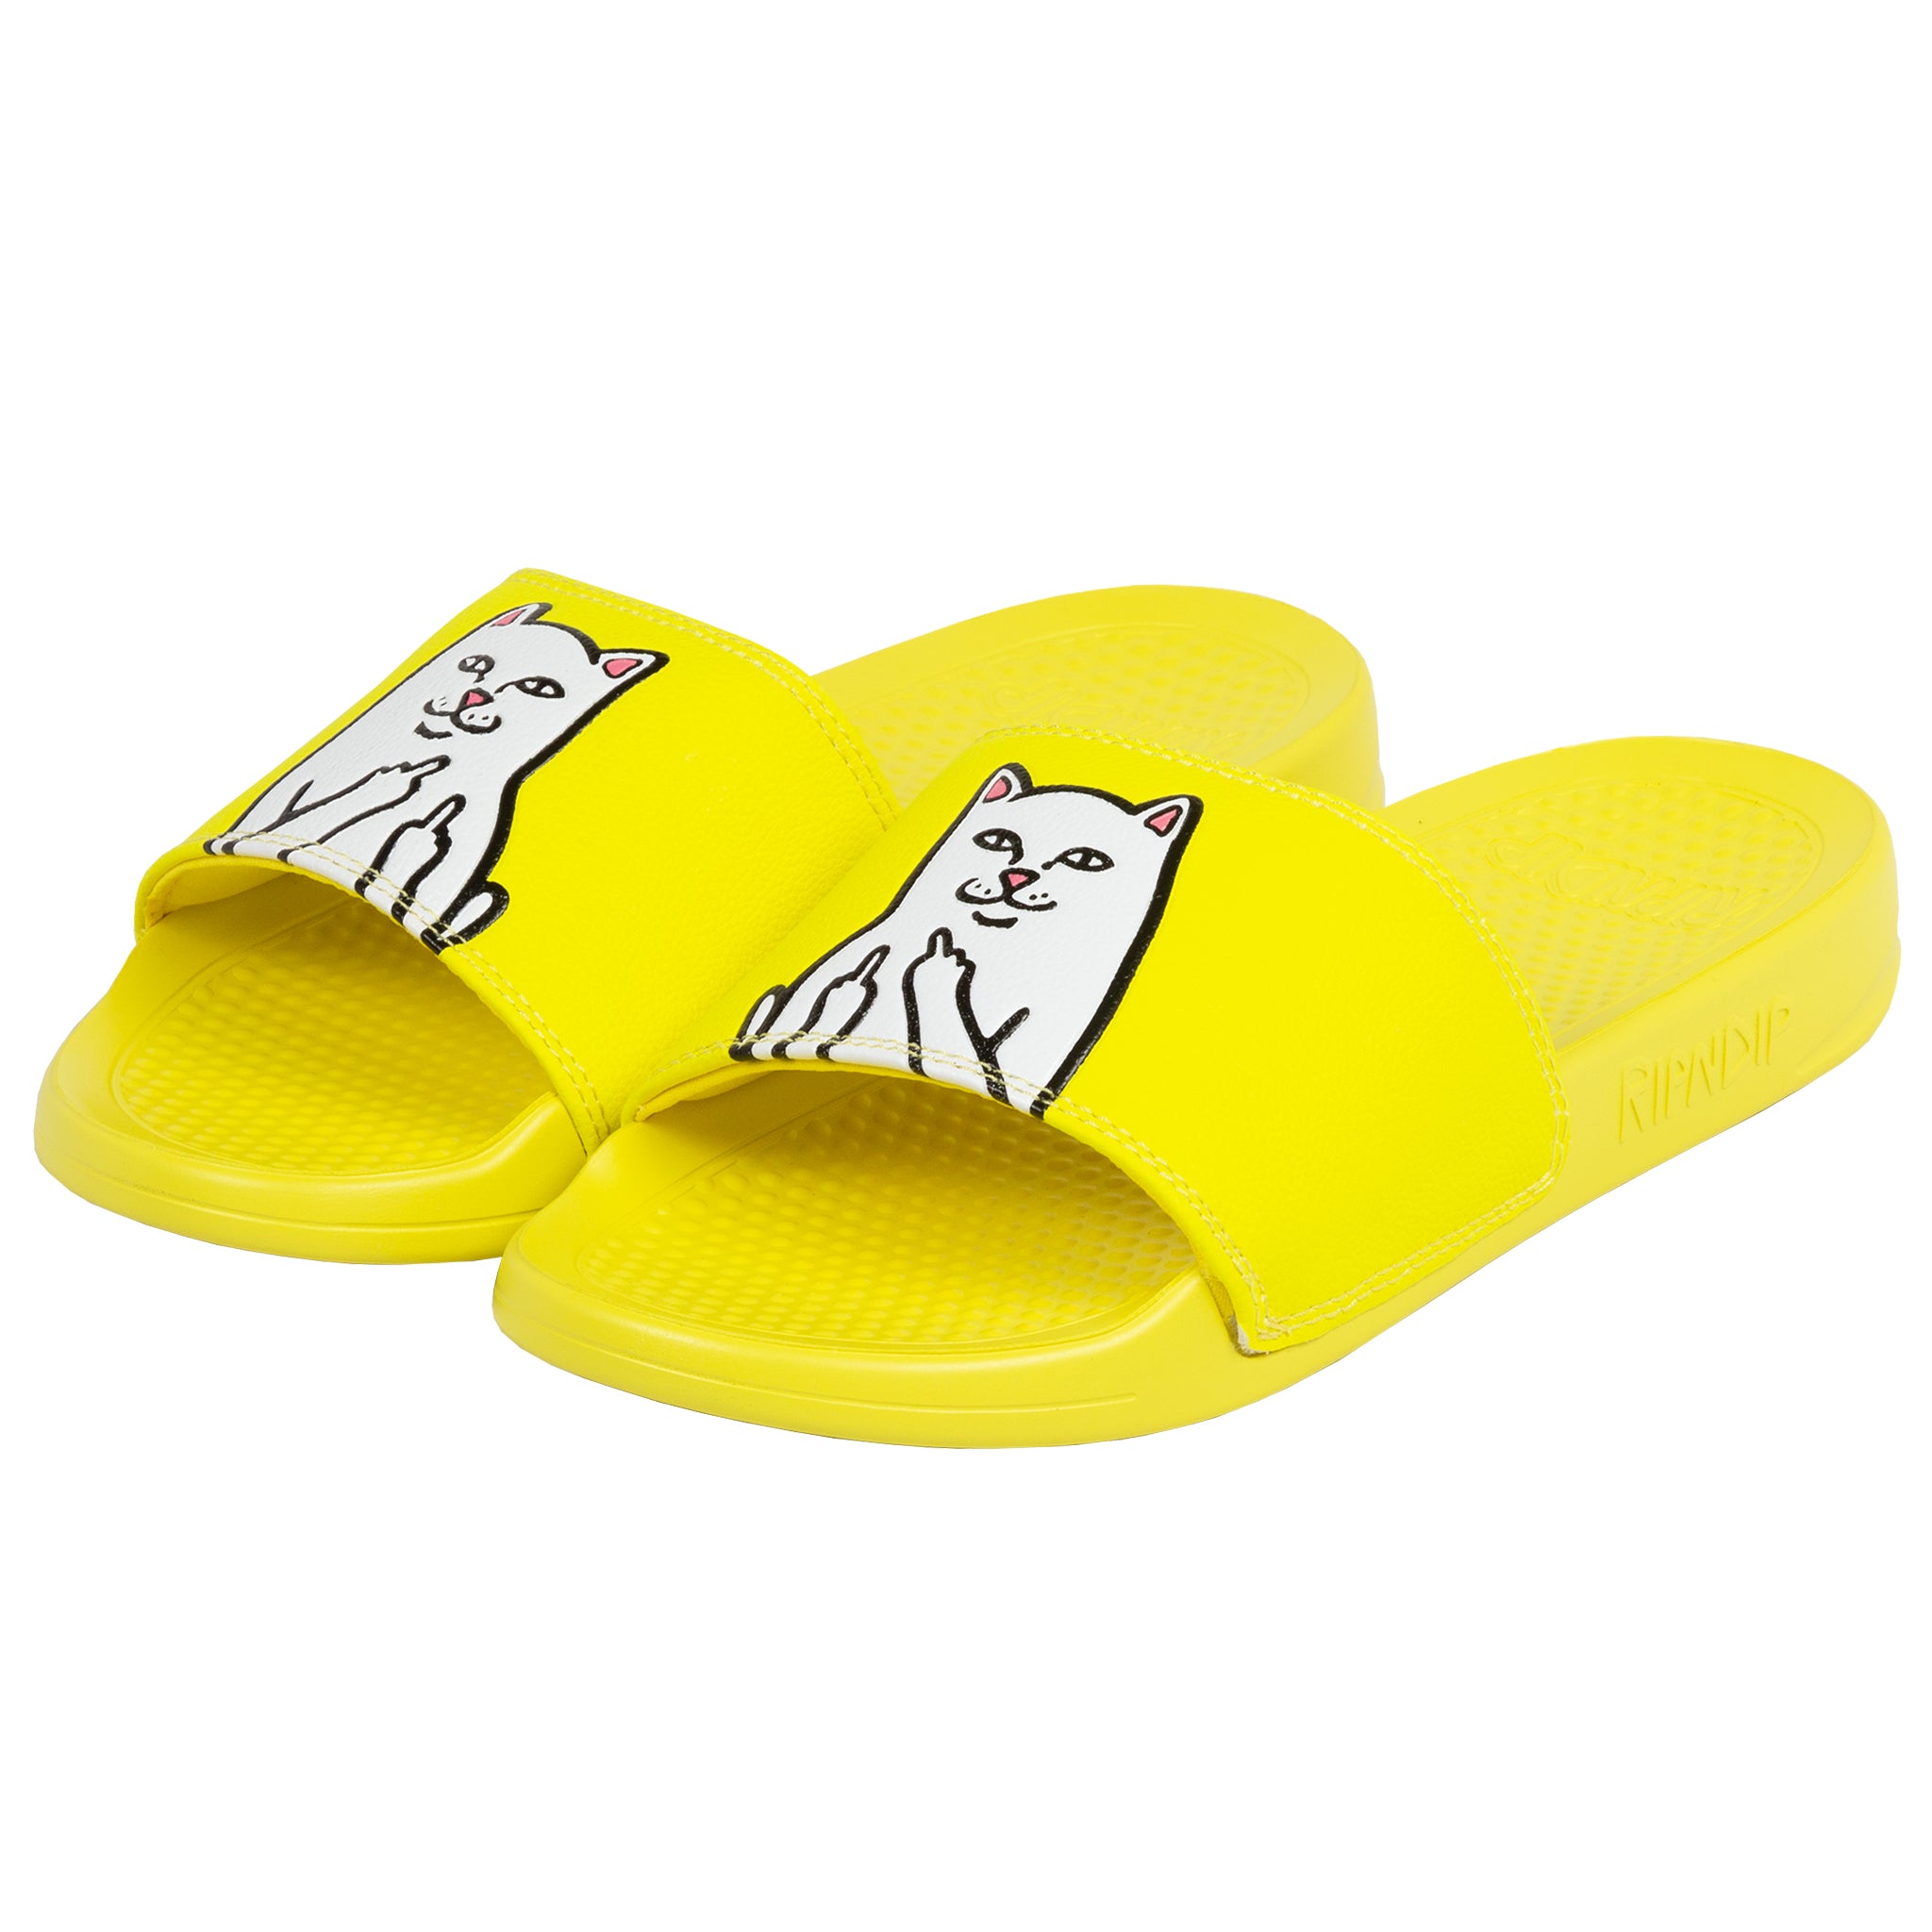 RipNDip Lord Nermal Slides (Safety Yellow)